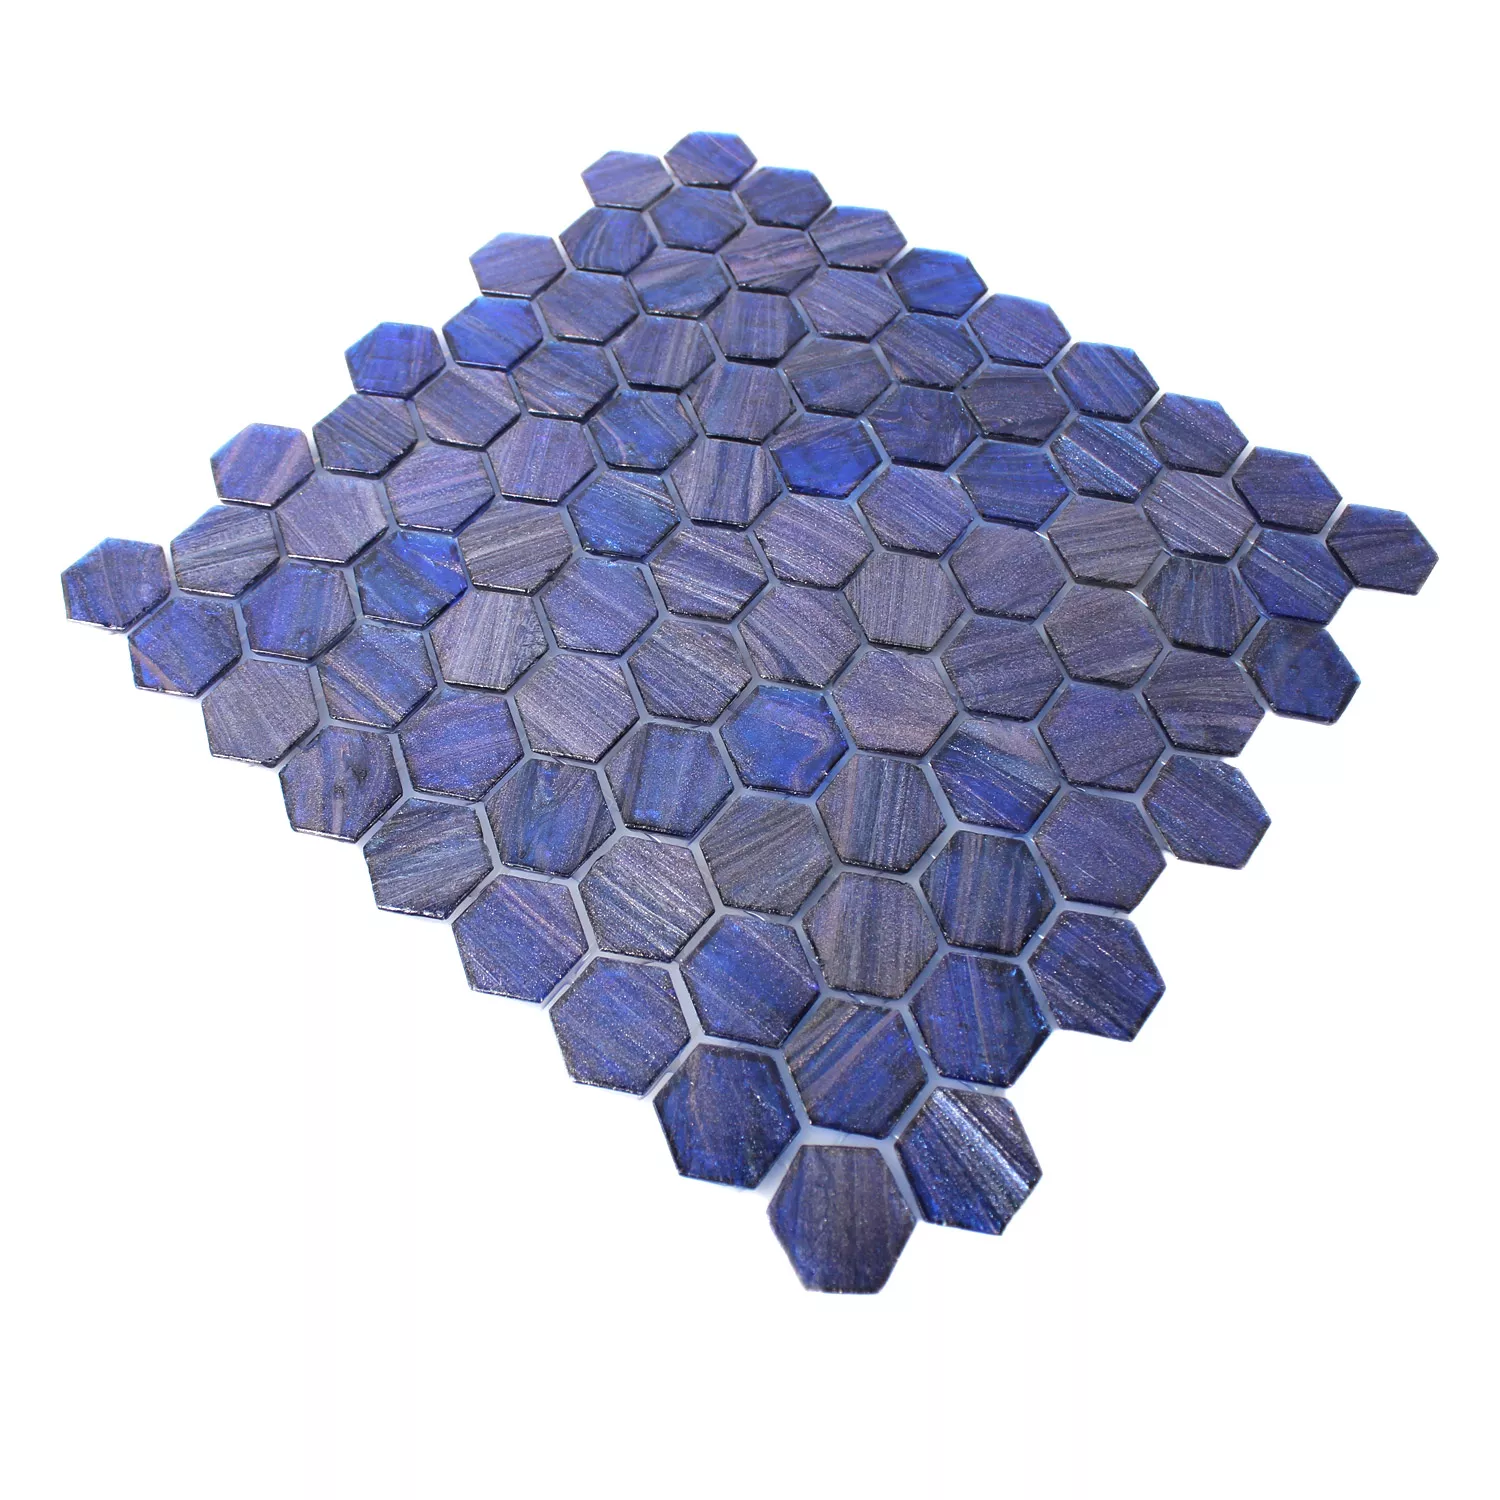 Mosaic Tiles Trend-Vi Glass Hexagonal 239